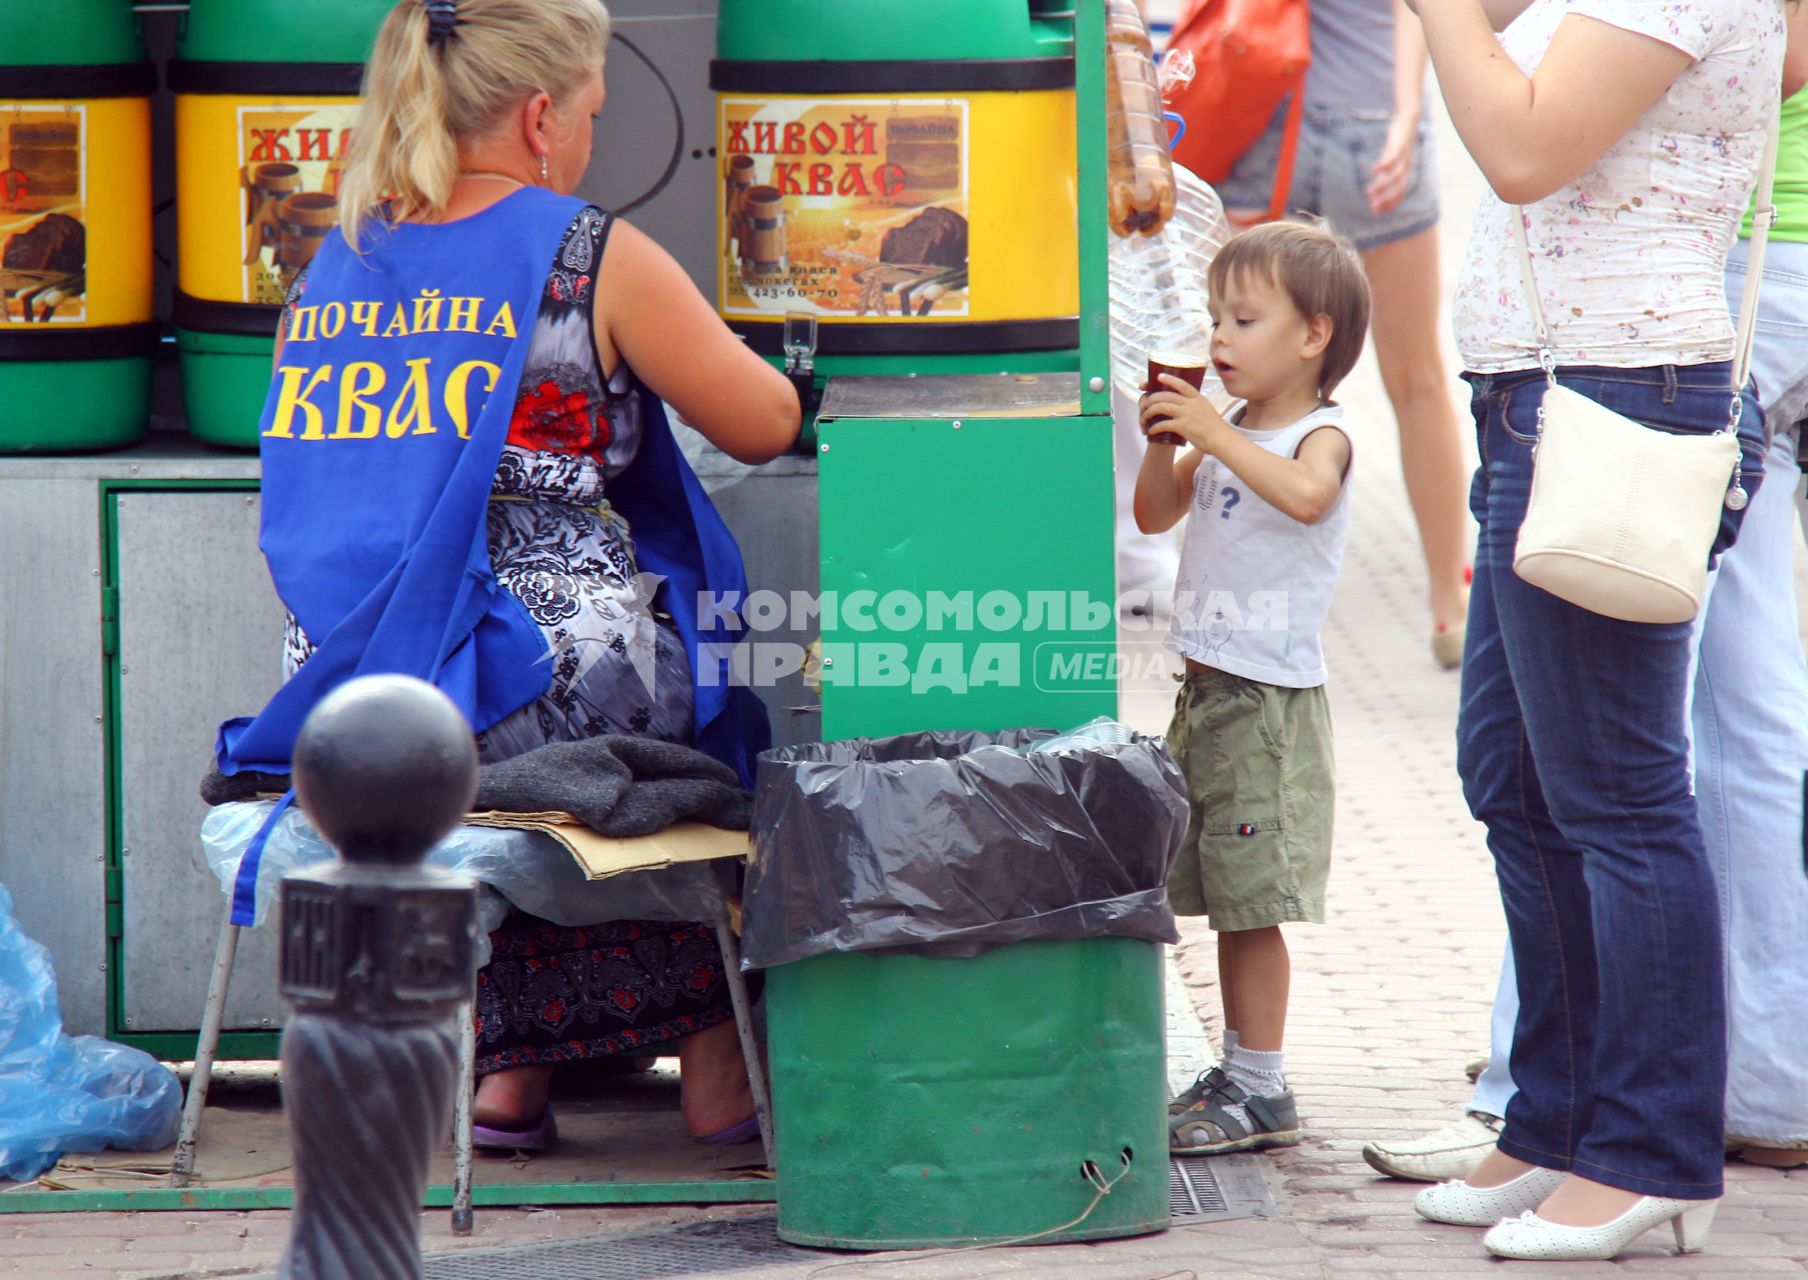 Продажа кваса на улице. Ребенок в ожидании напитка.